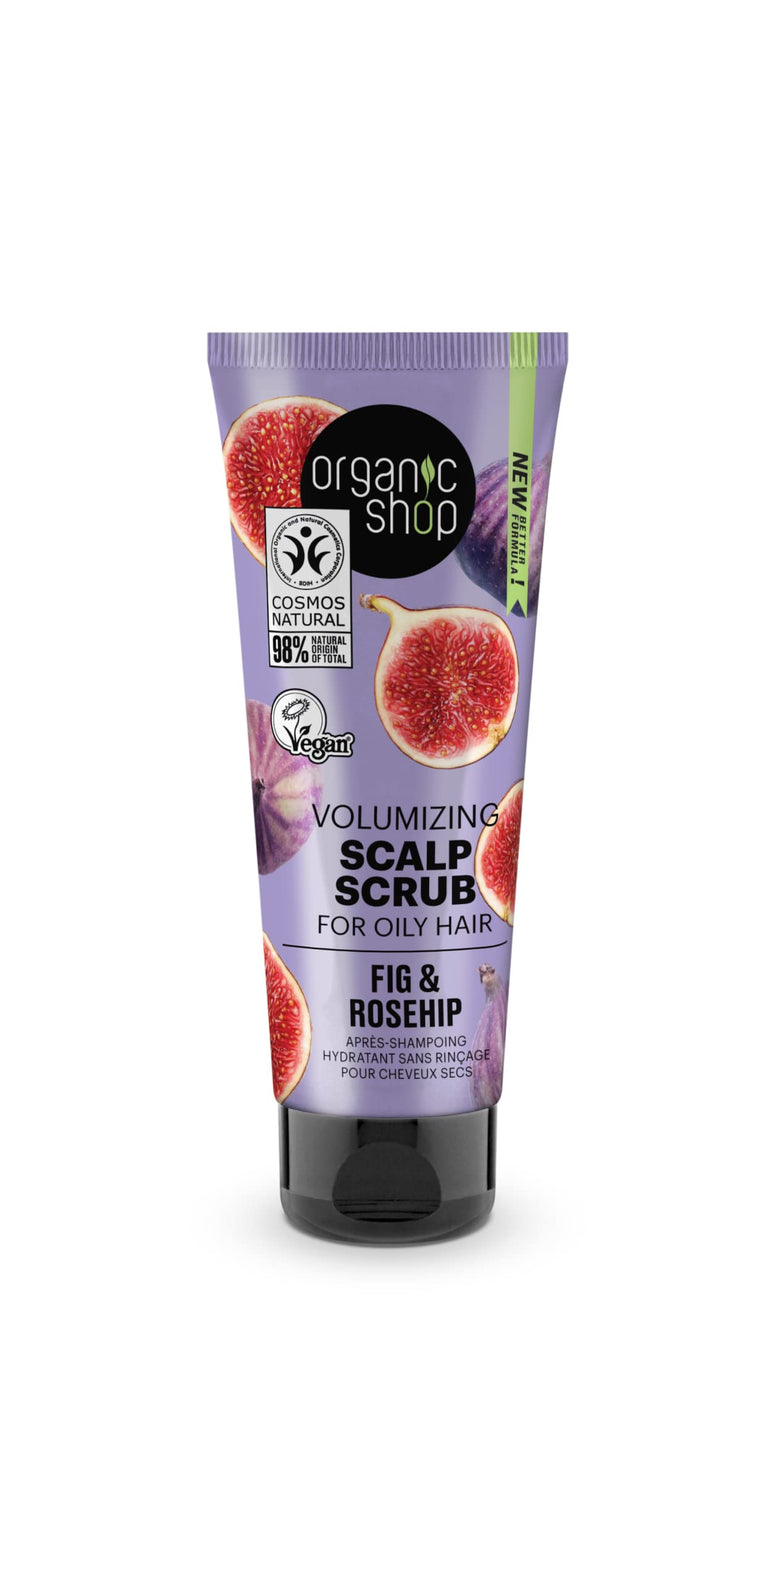 Organic Shop Volumizing Scalp Scrub for Oily Hair Fig and Rosehip, 75 ml